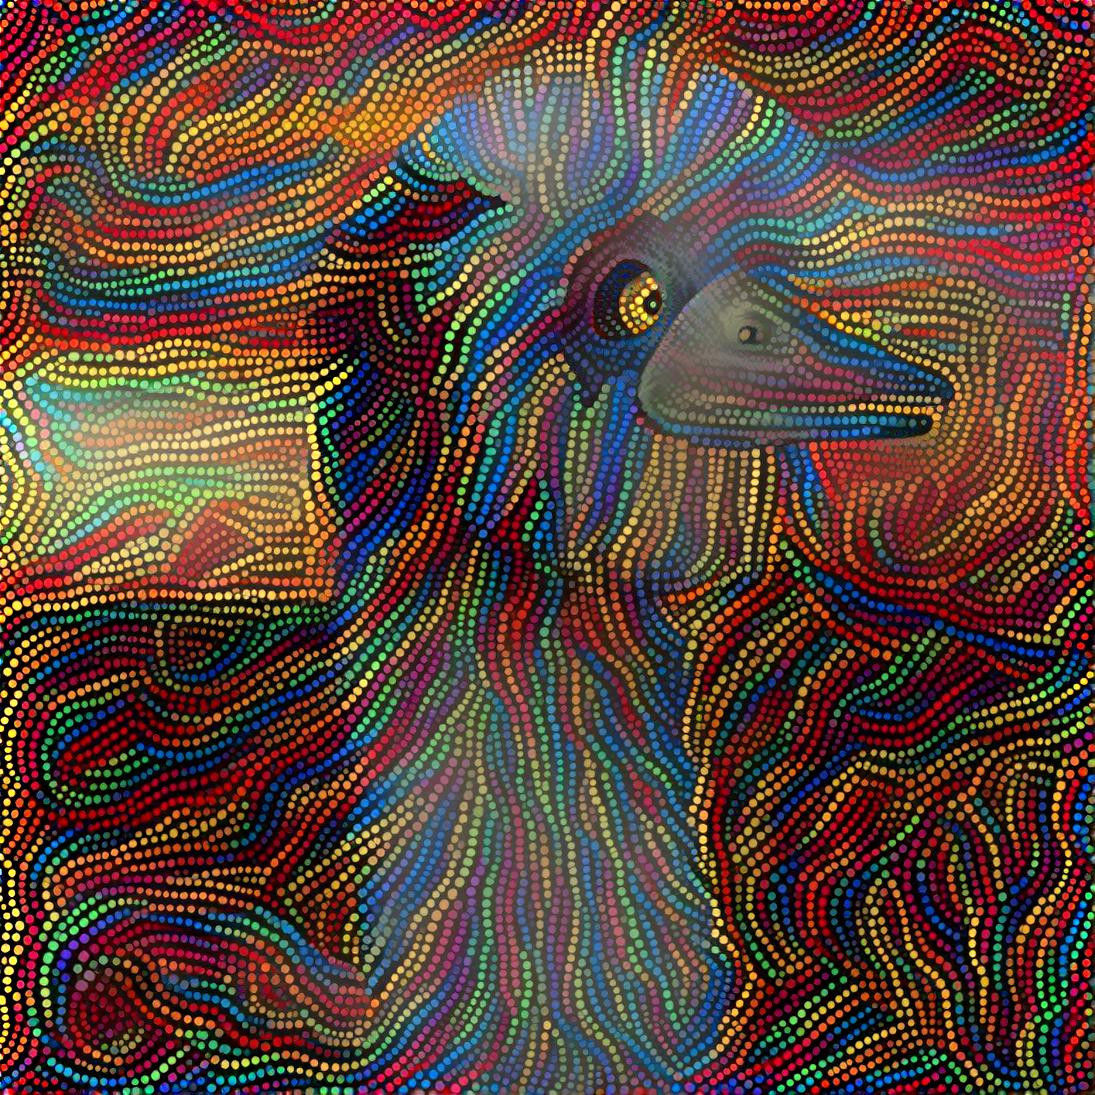 EMU in the Neural Network Dreamtime